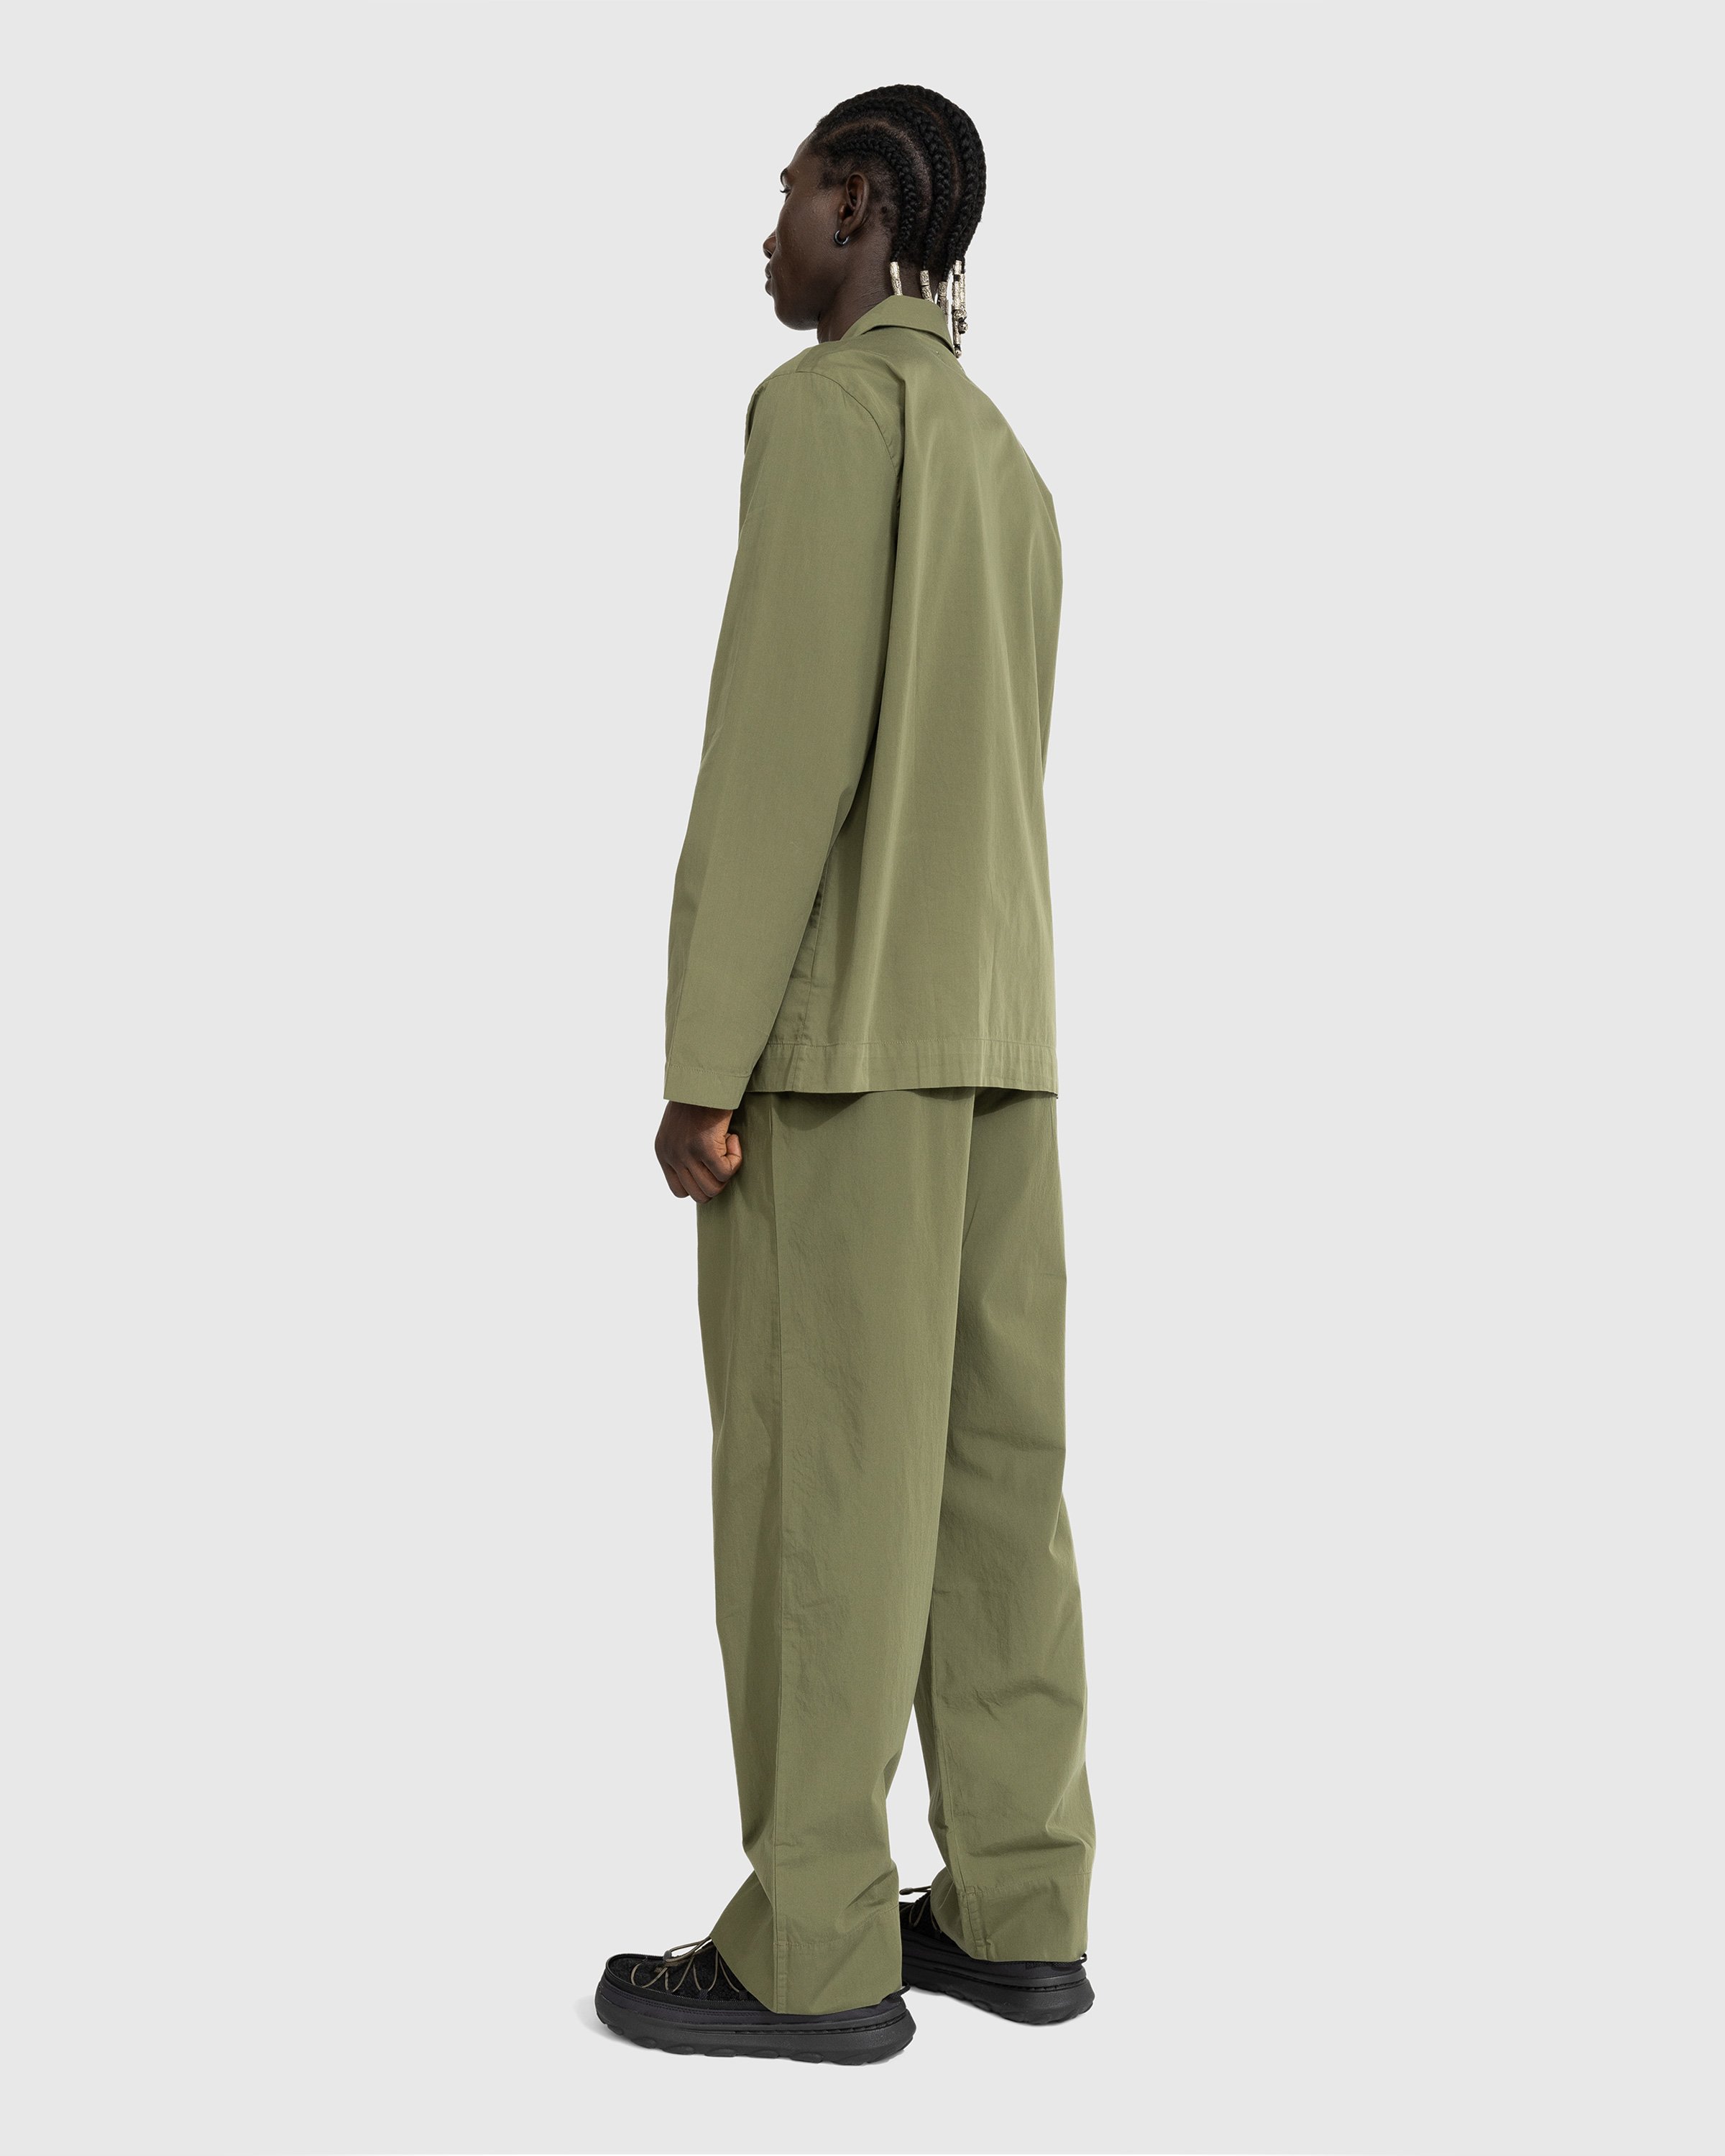 Tekla - Cotton Poplin Pyjamas Shirt Willow - Clothing - Green - Image 3